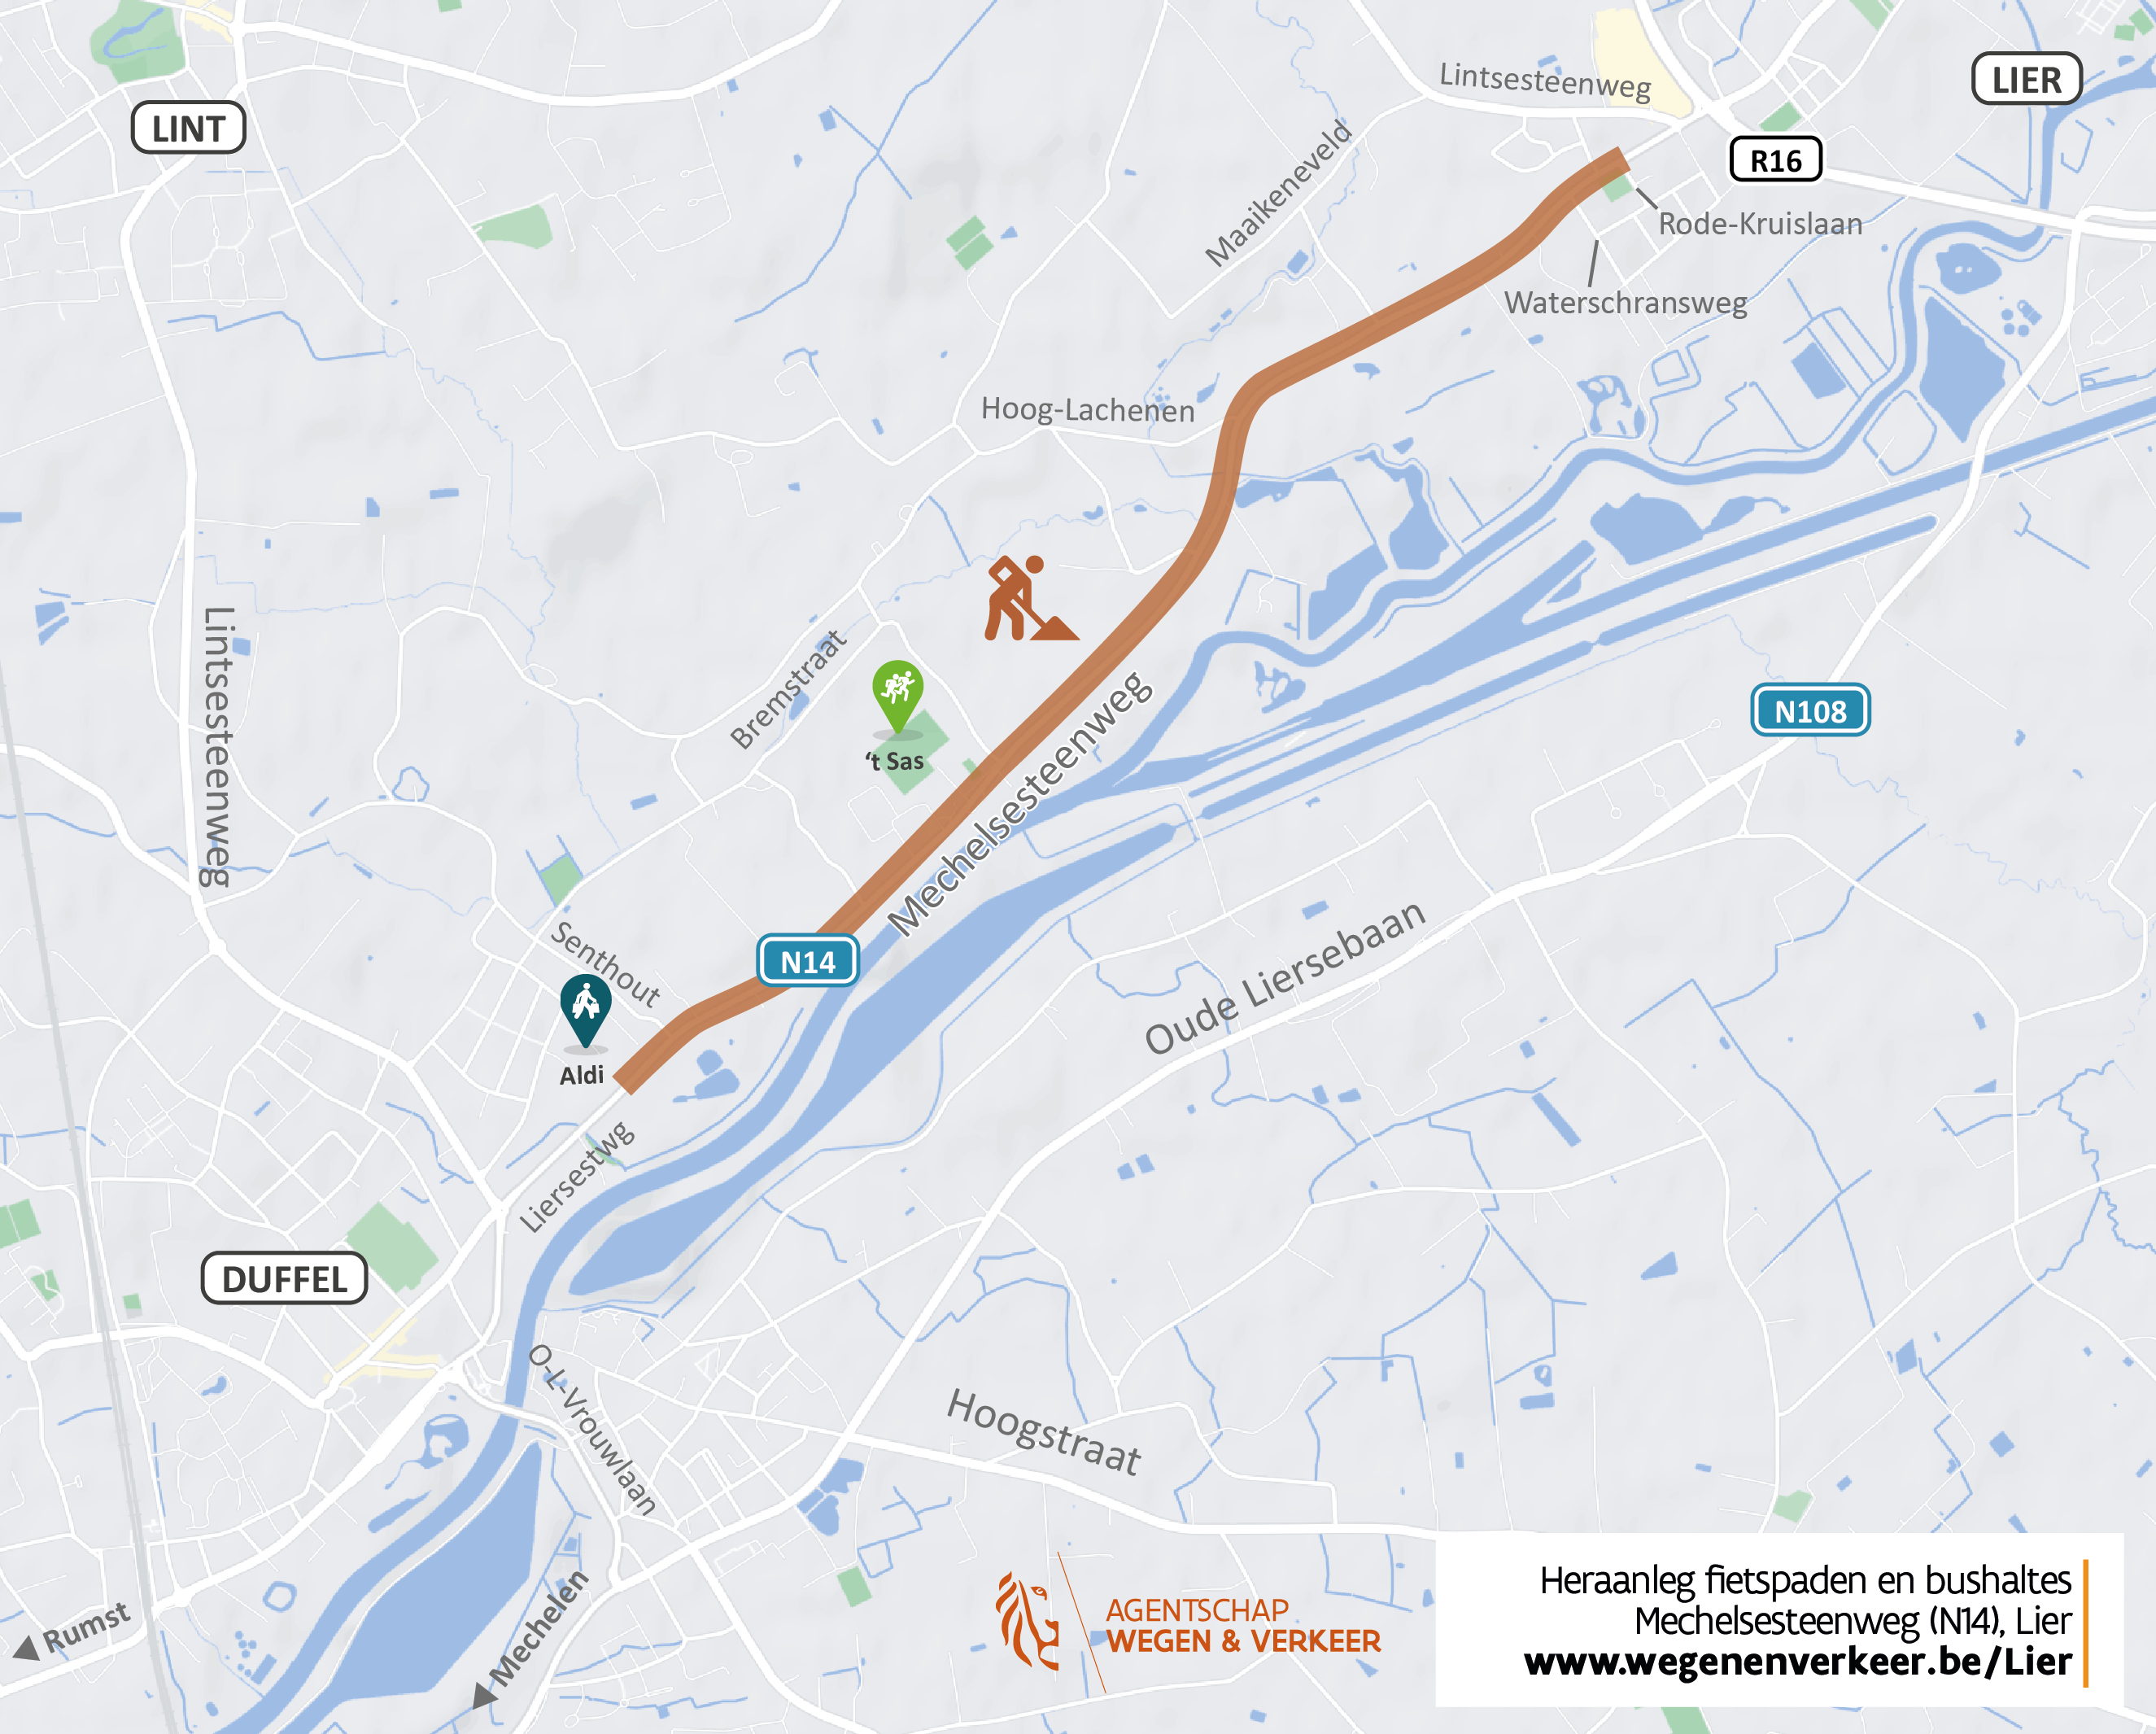 N14 Mechelsesteenweg Lier - werken aan fietspaden